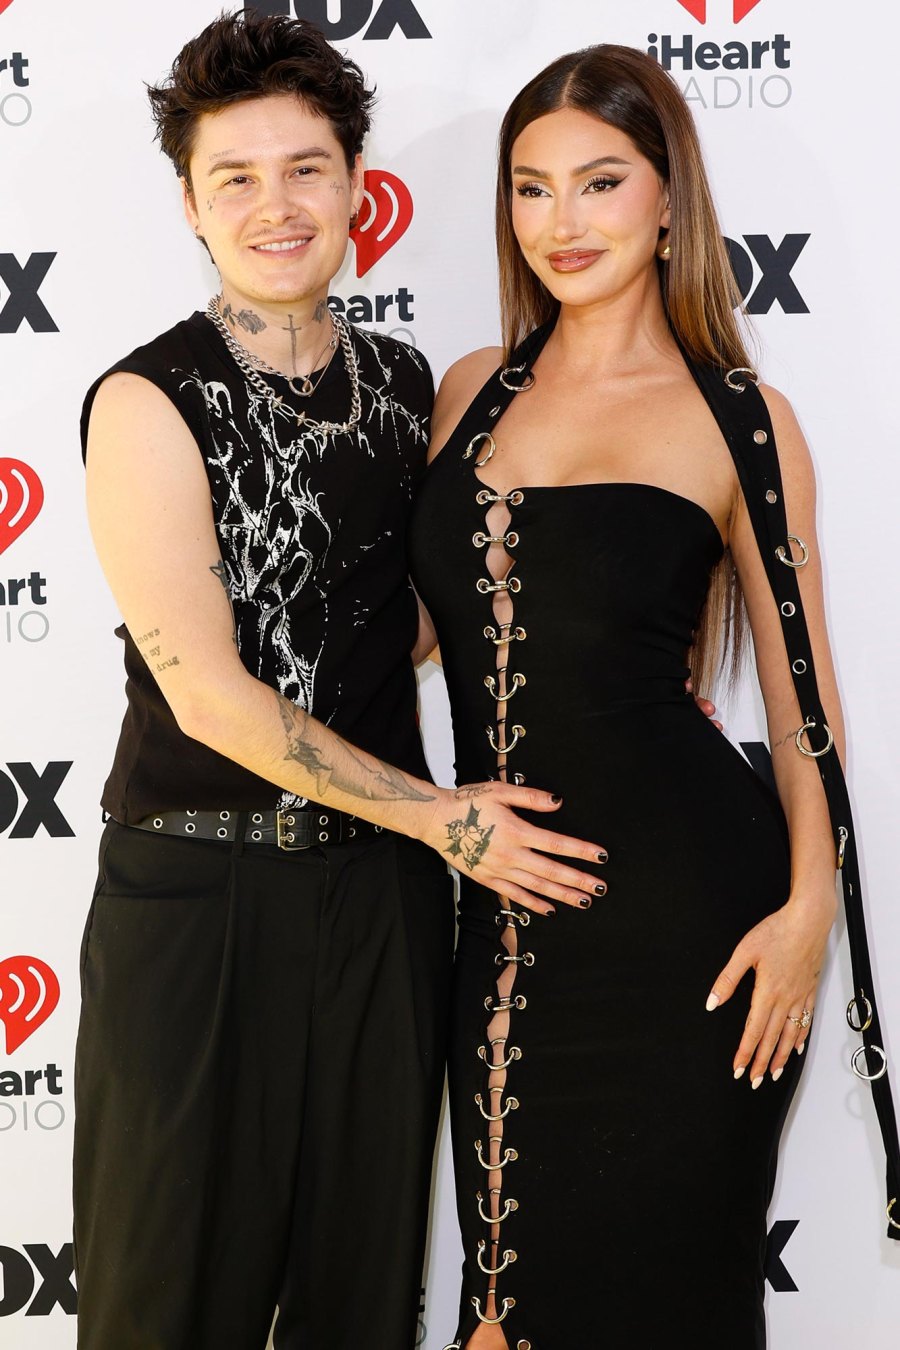 Francesca Farago Shows Off Baby Bump at iHeartRadio Music Awards